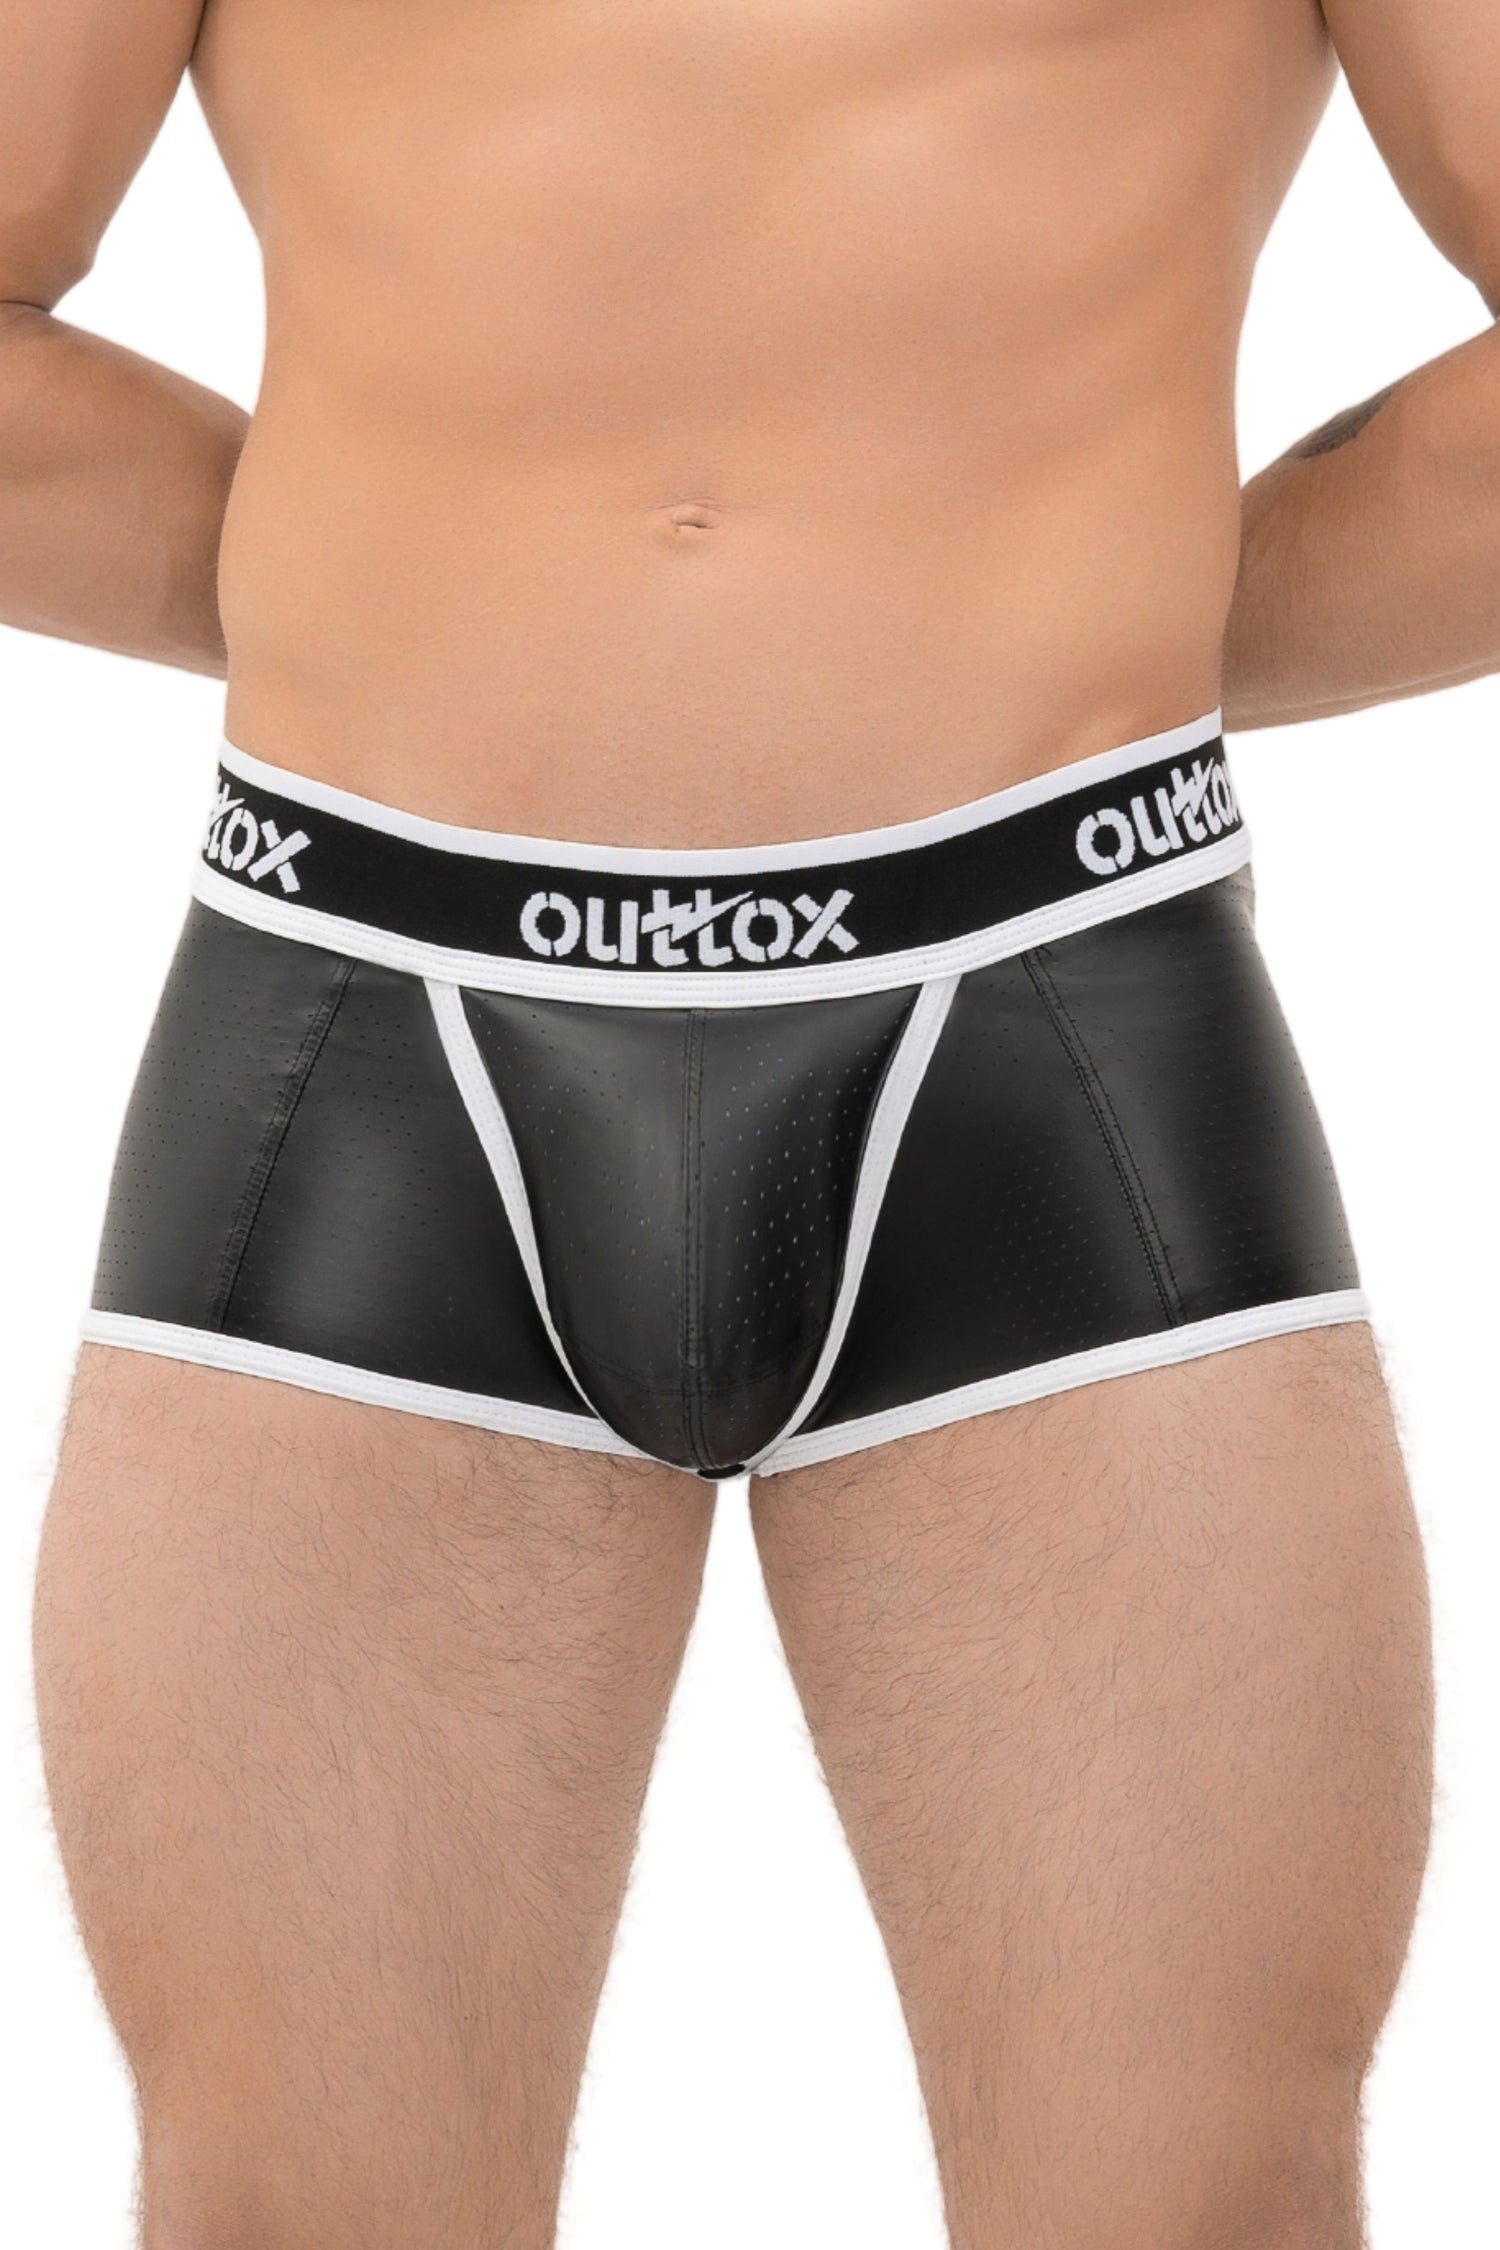 Outtox. Open kofferbakshort met kliksluiting. Zwart+Wit